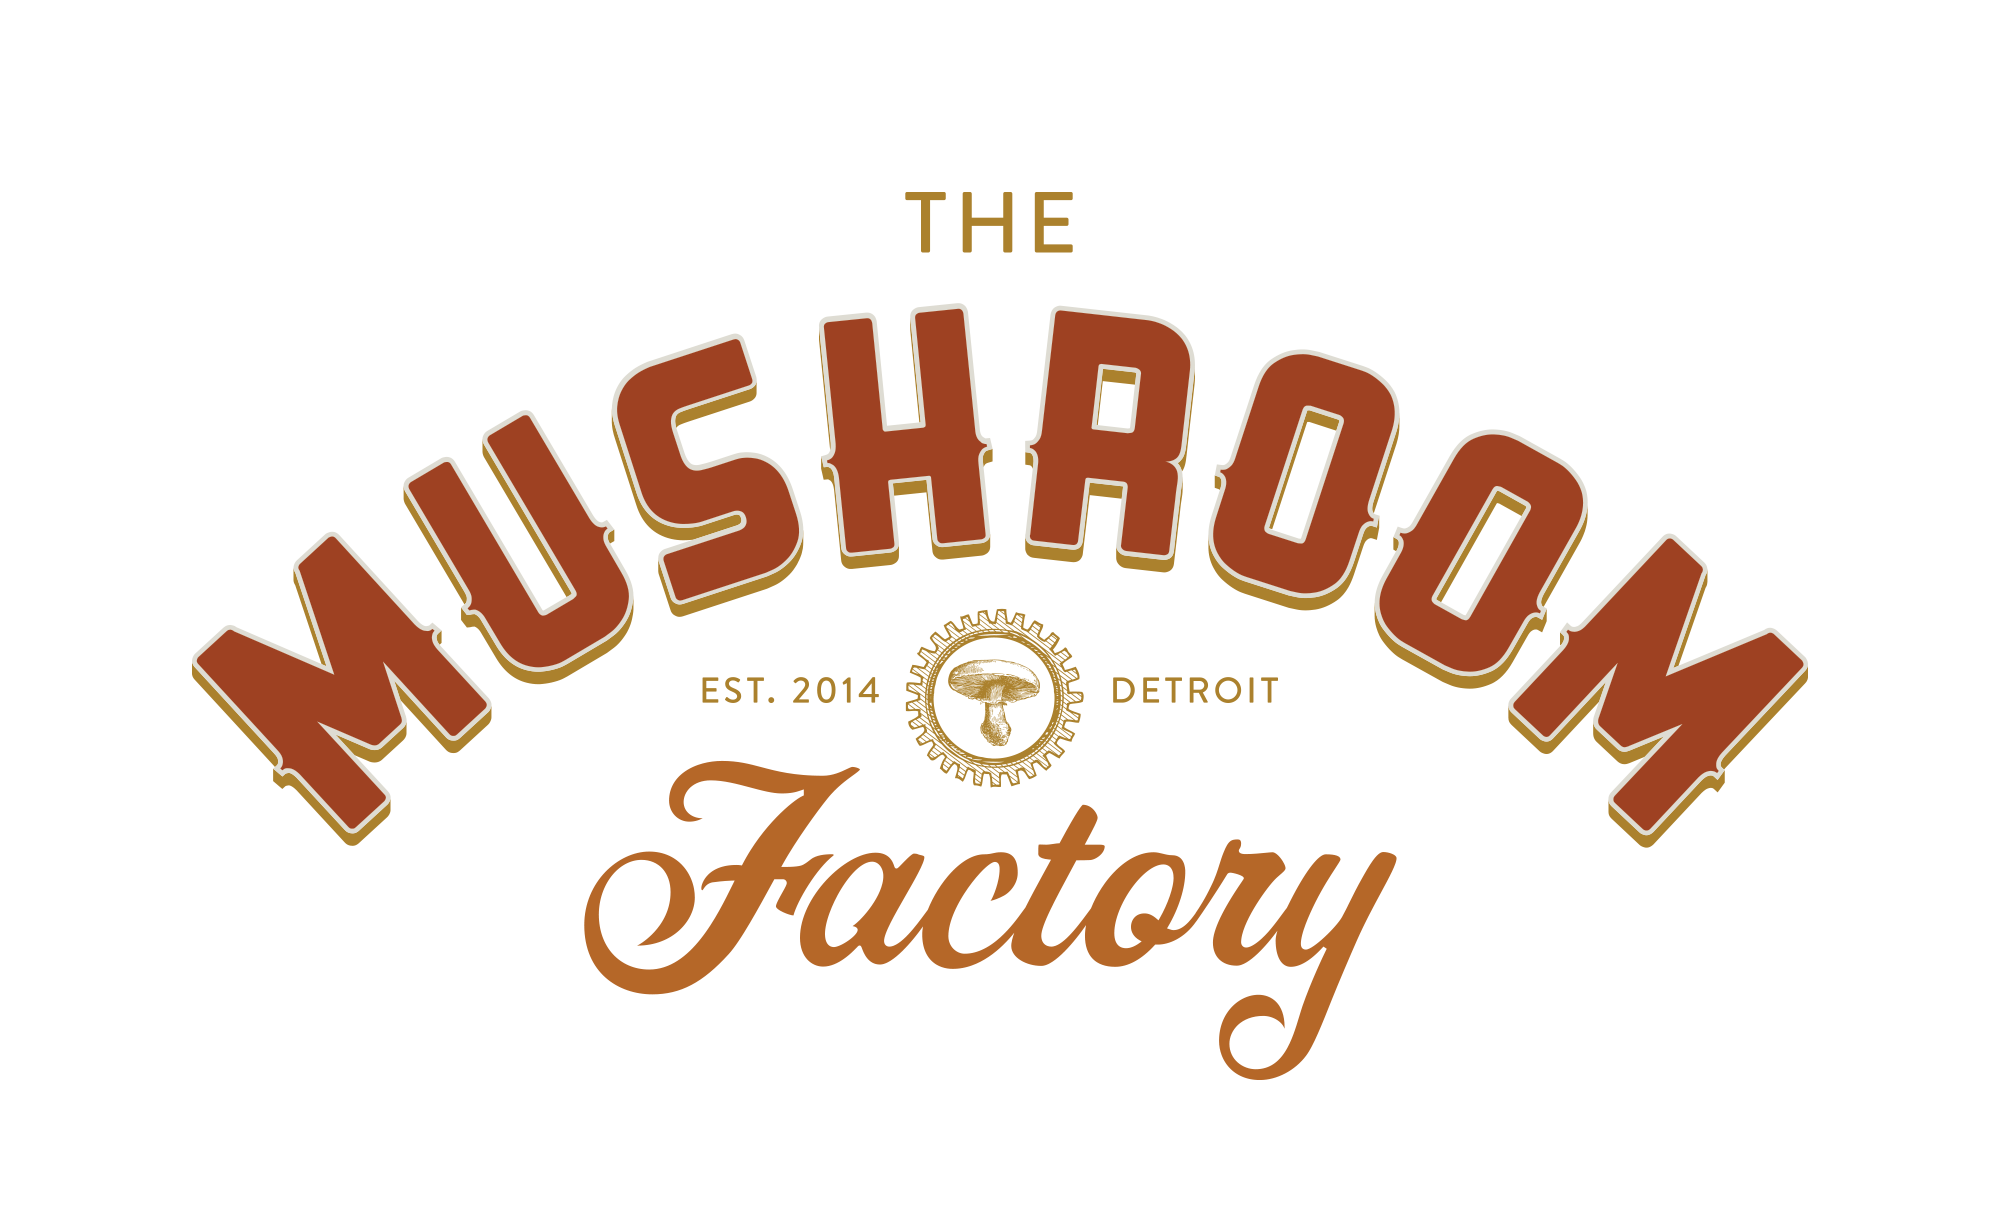 The Mushroom Factory